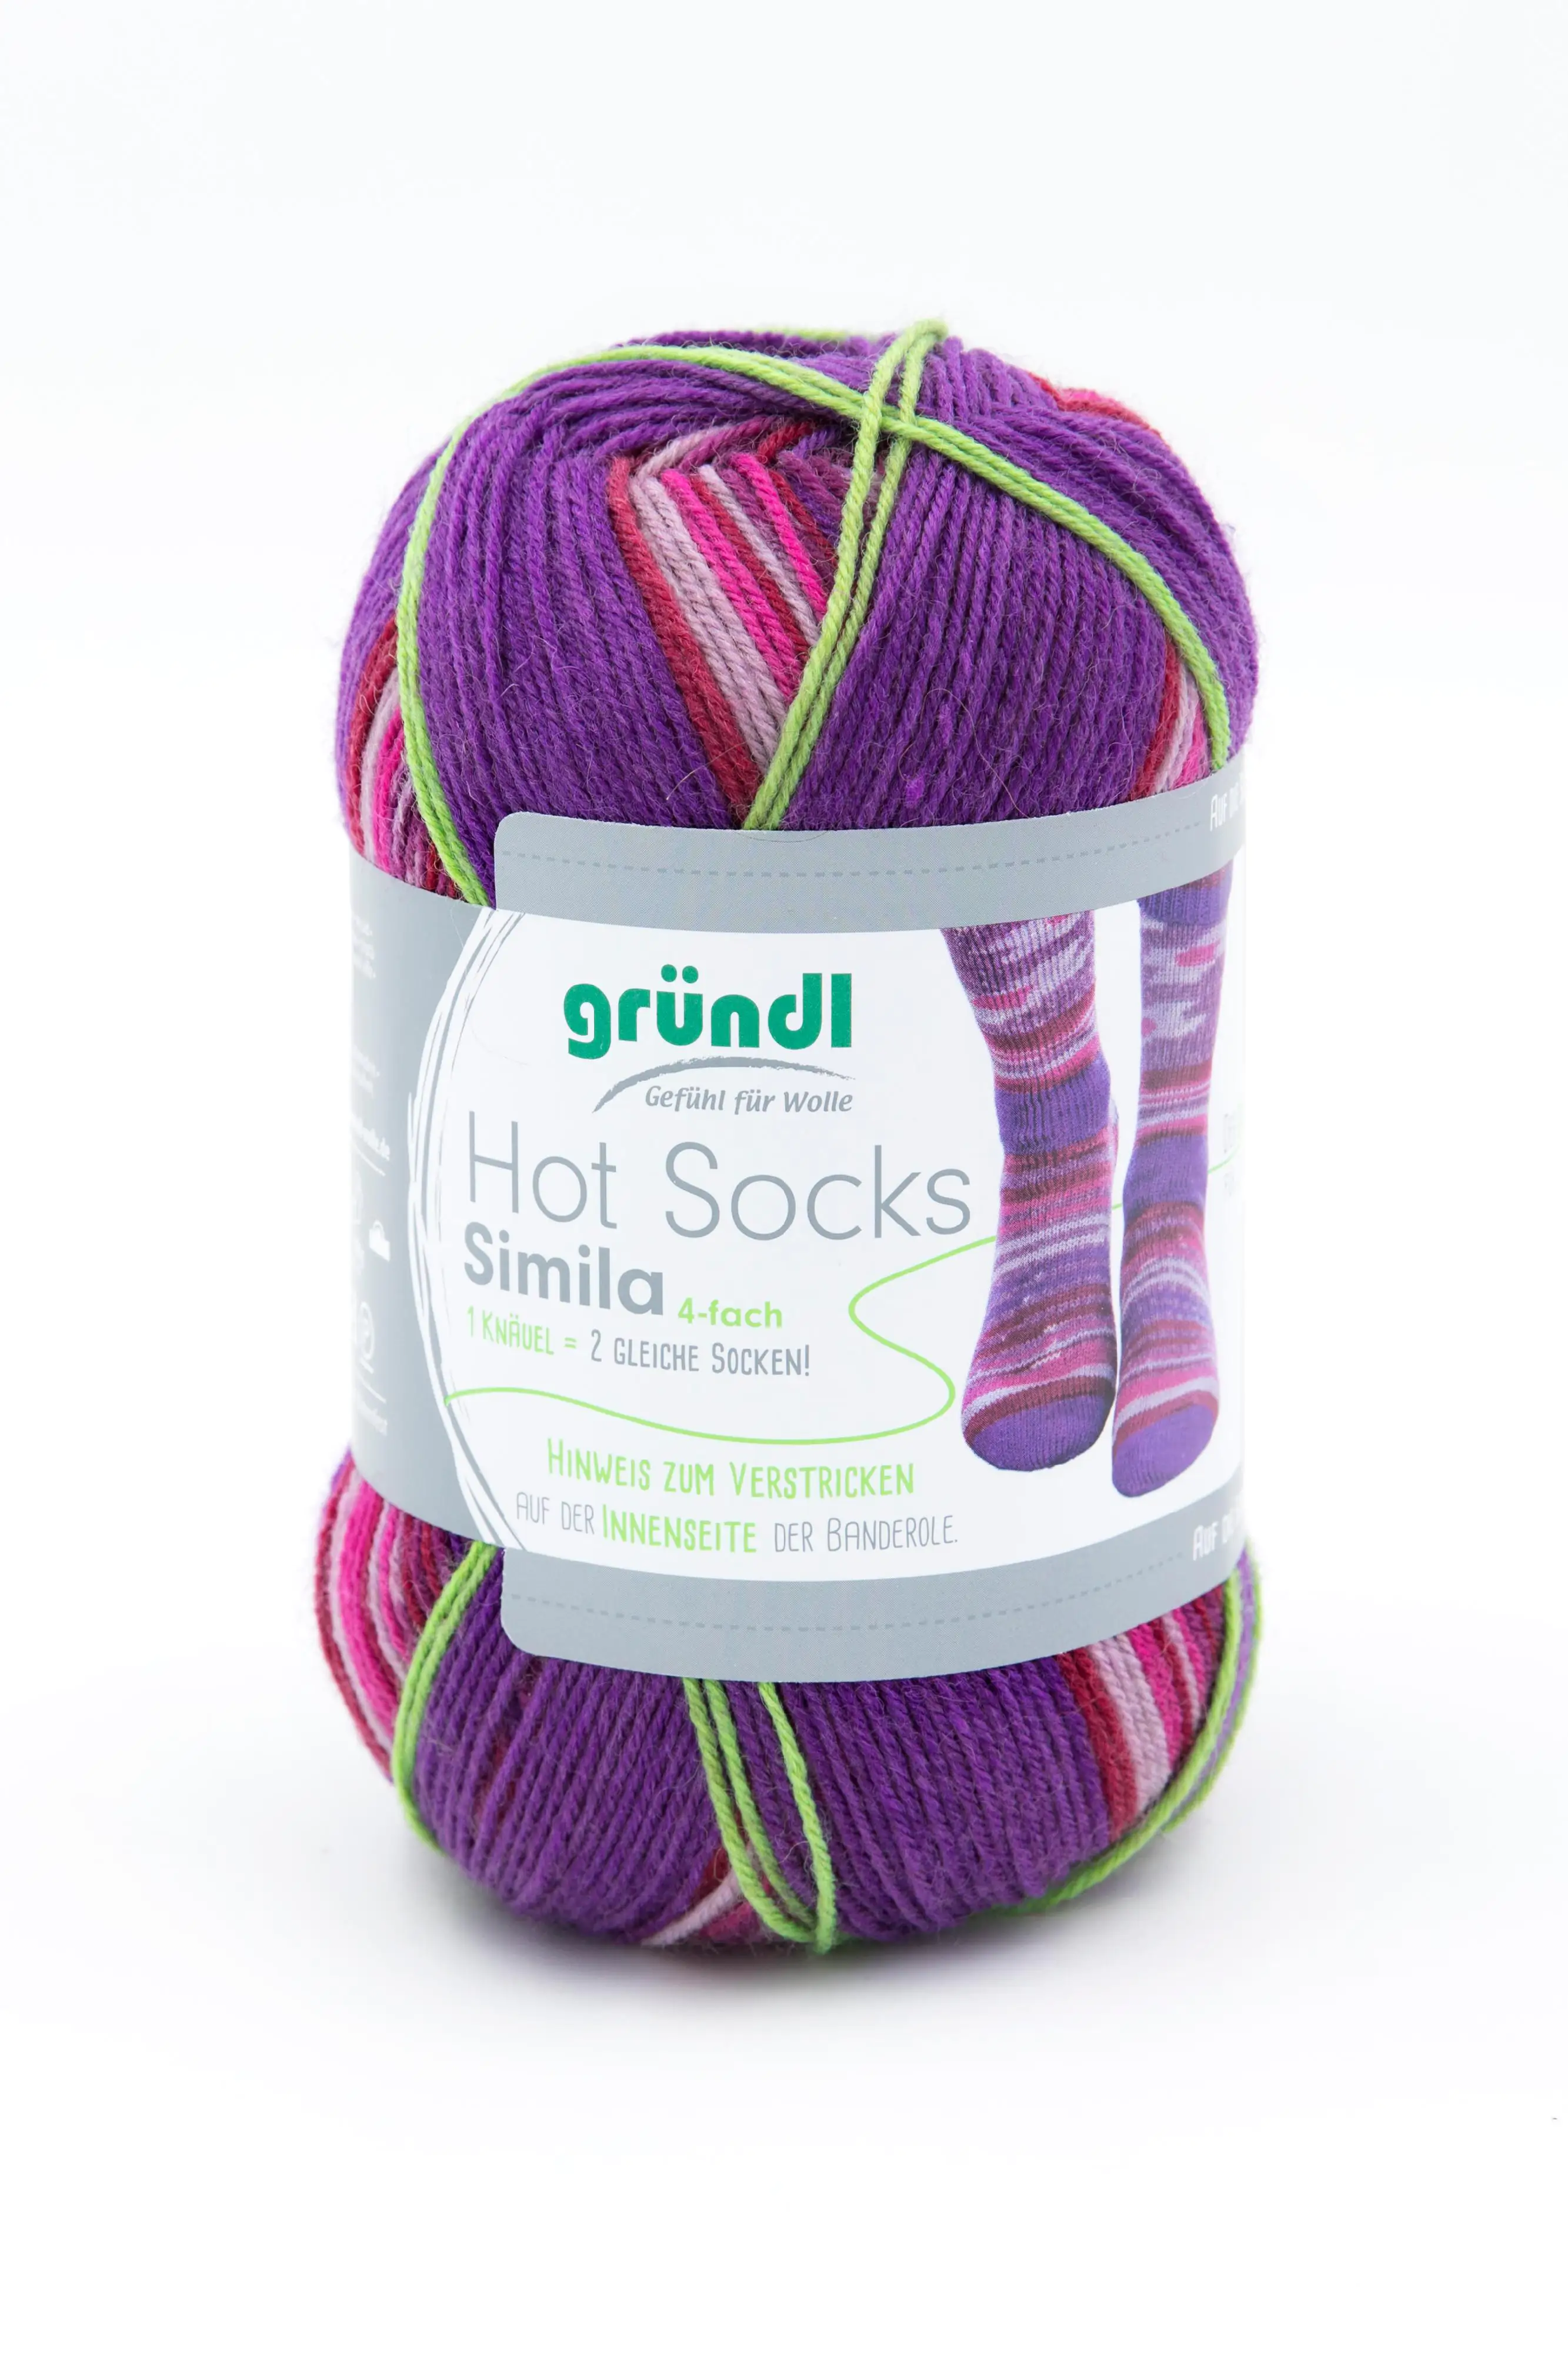 Baumarkt Simila Hot Socks Sockenwolle violett-lila-flieder-fuchsia-rost 100 Globus kaufen | g Gründl